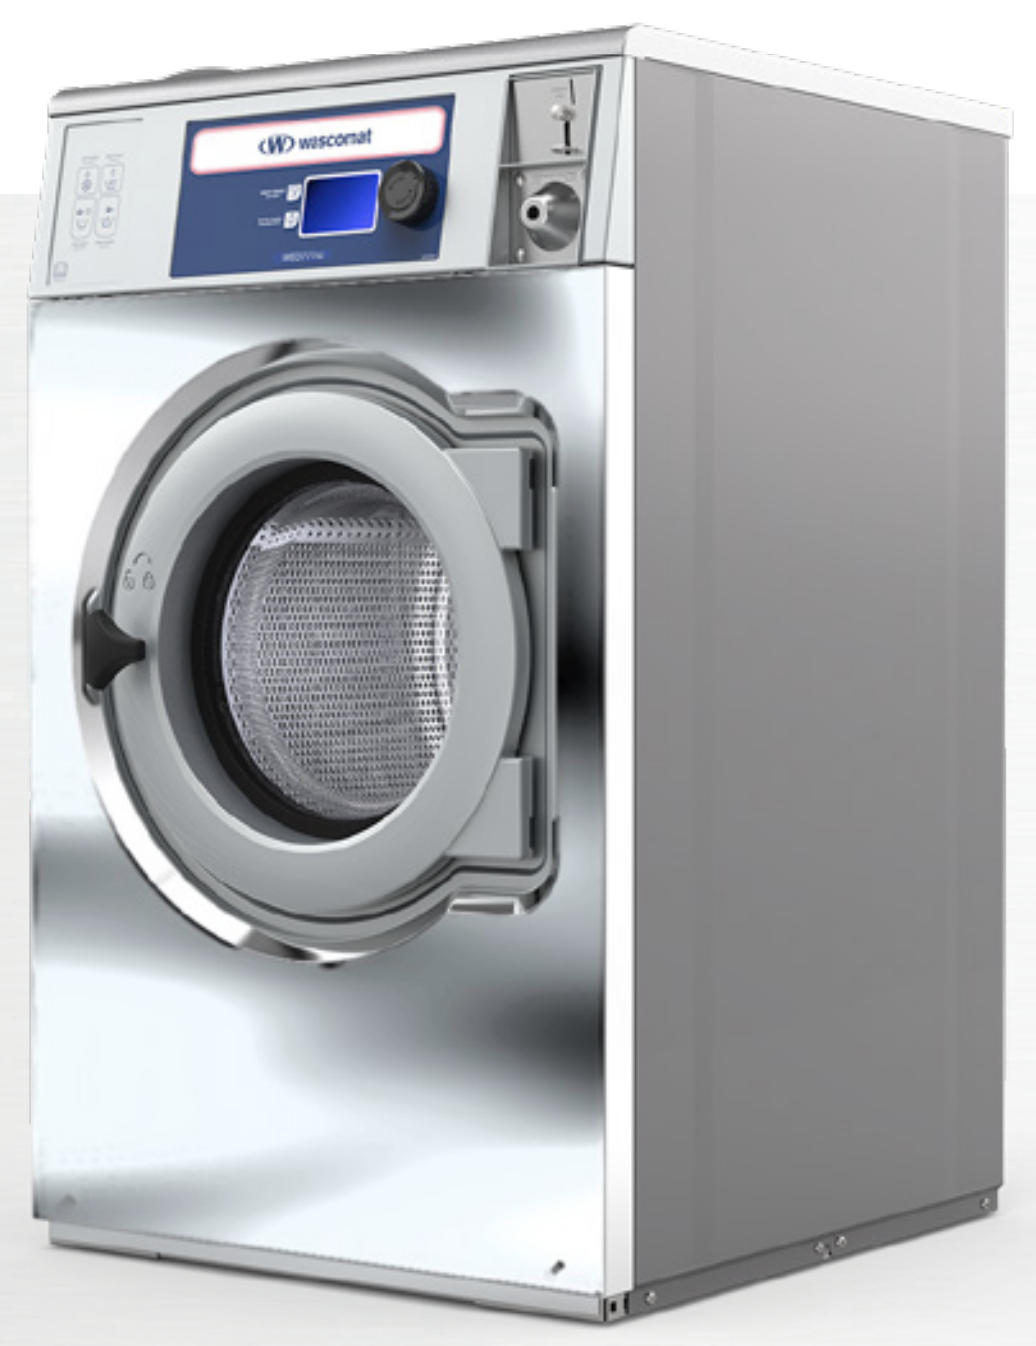 New 2022 Wascomat Wed762 - Automatic Laundry Service Of Va, Inc.